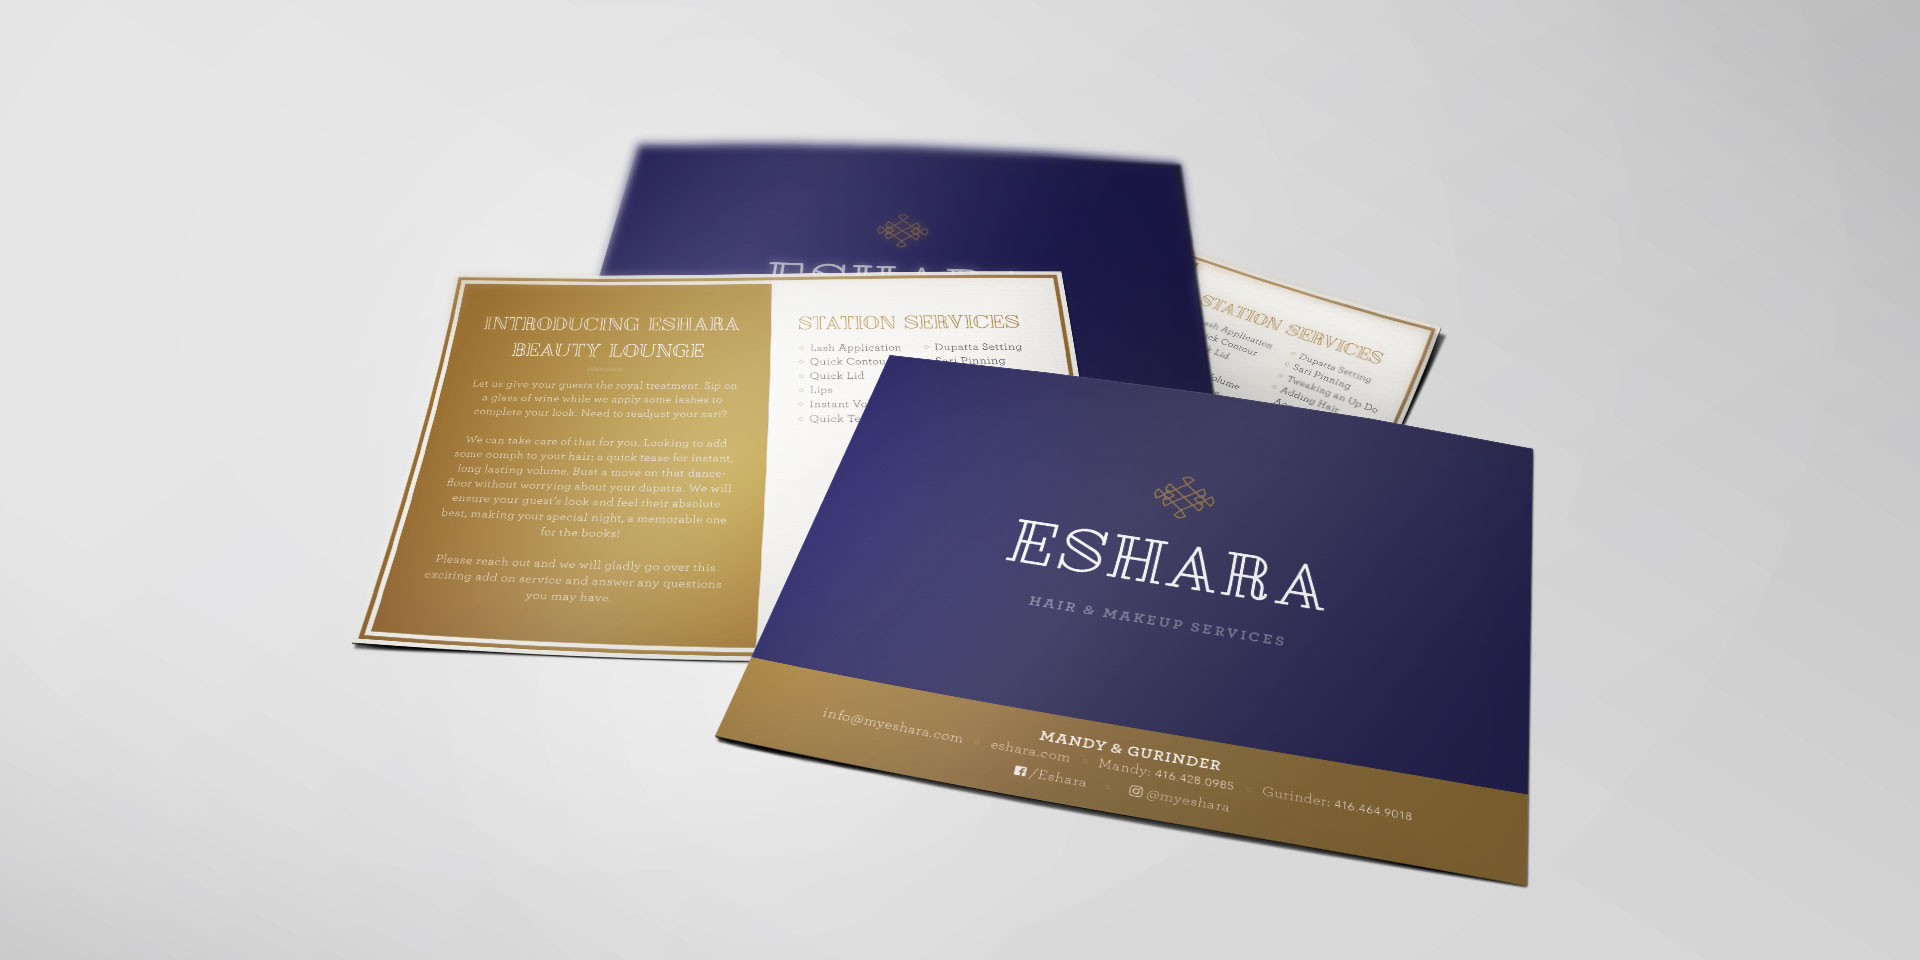 Eshara handouts